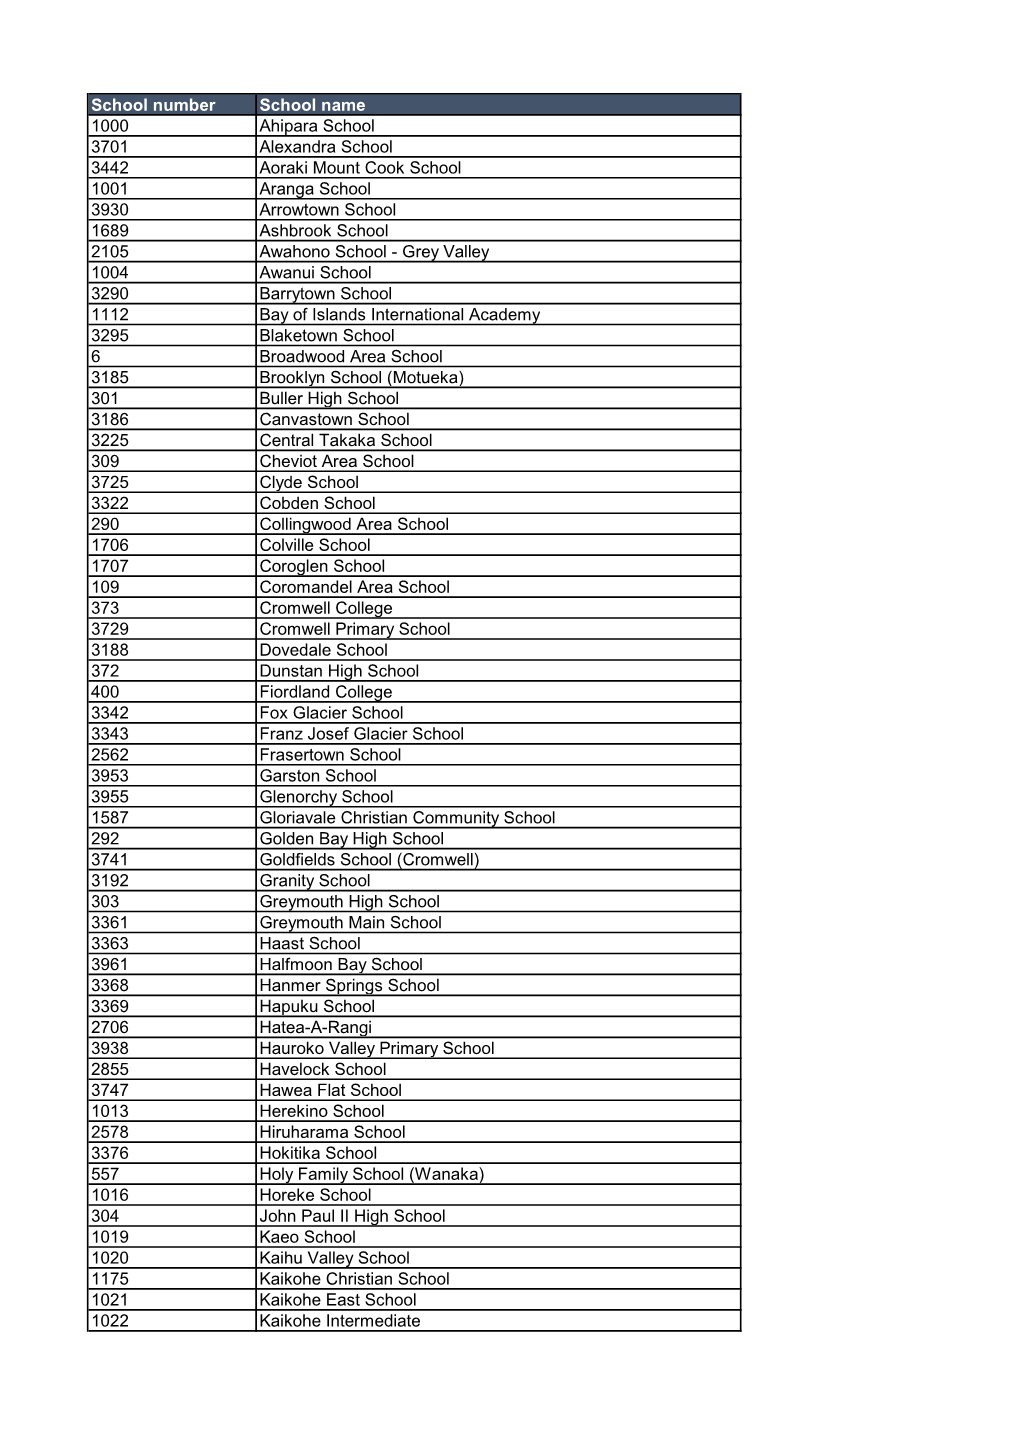 School List for Isolation Criterion.Xlsx